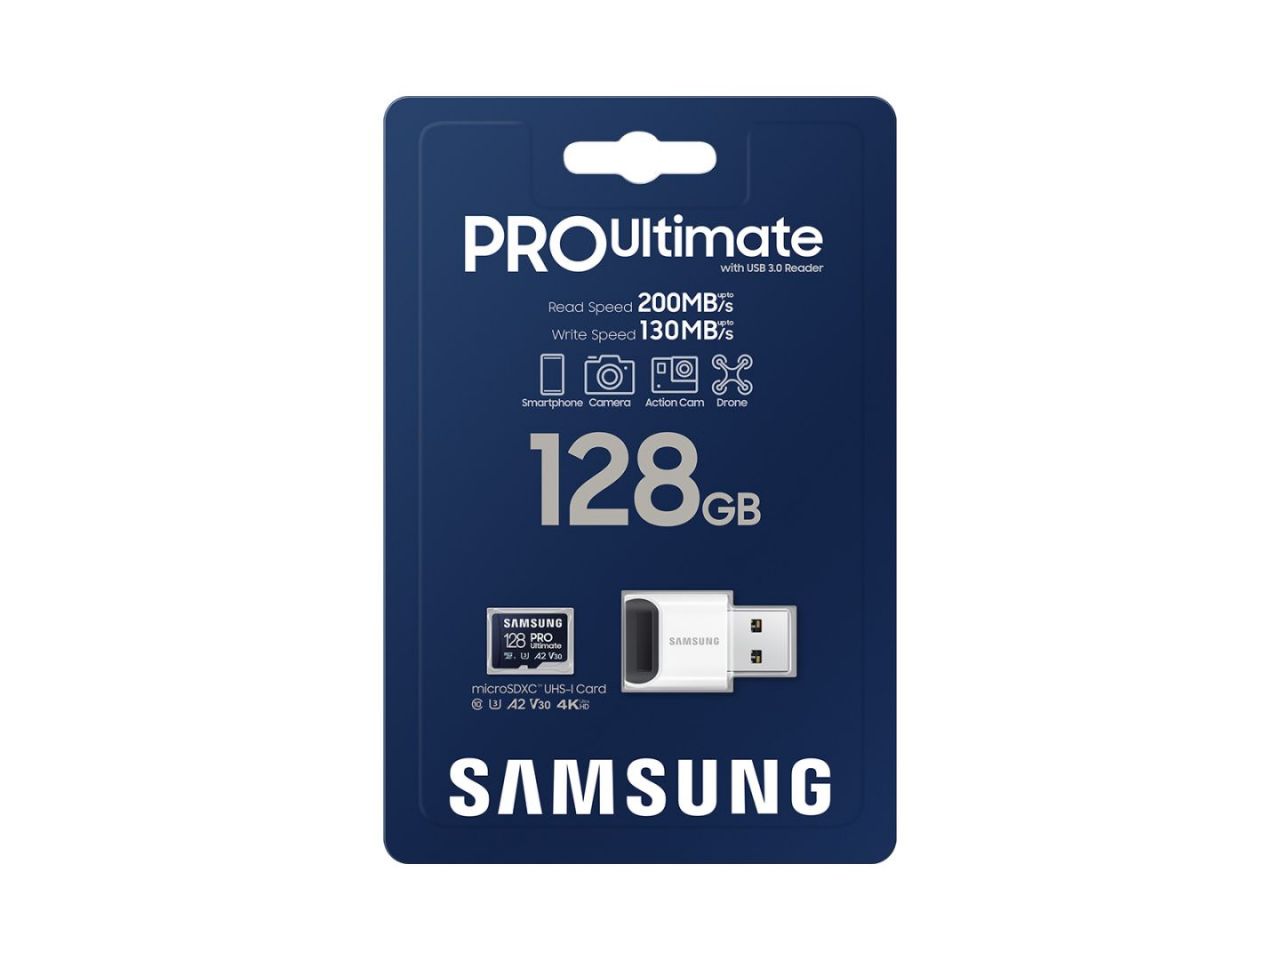 Samsung 128GB microSDXC Pro Ultimate Class10 U3 A2 V30 + Reader